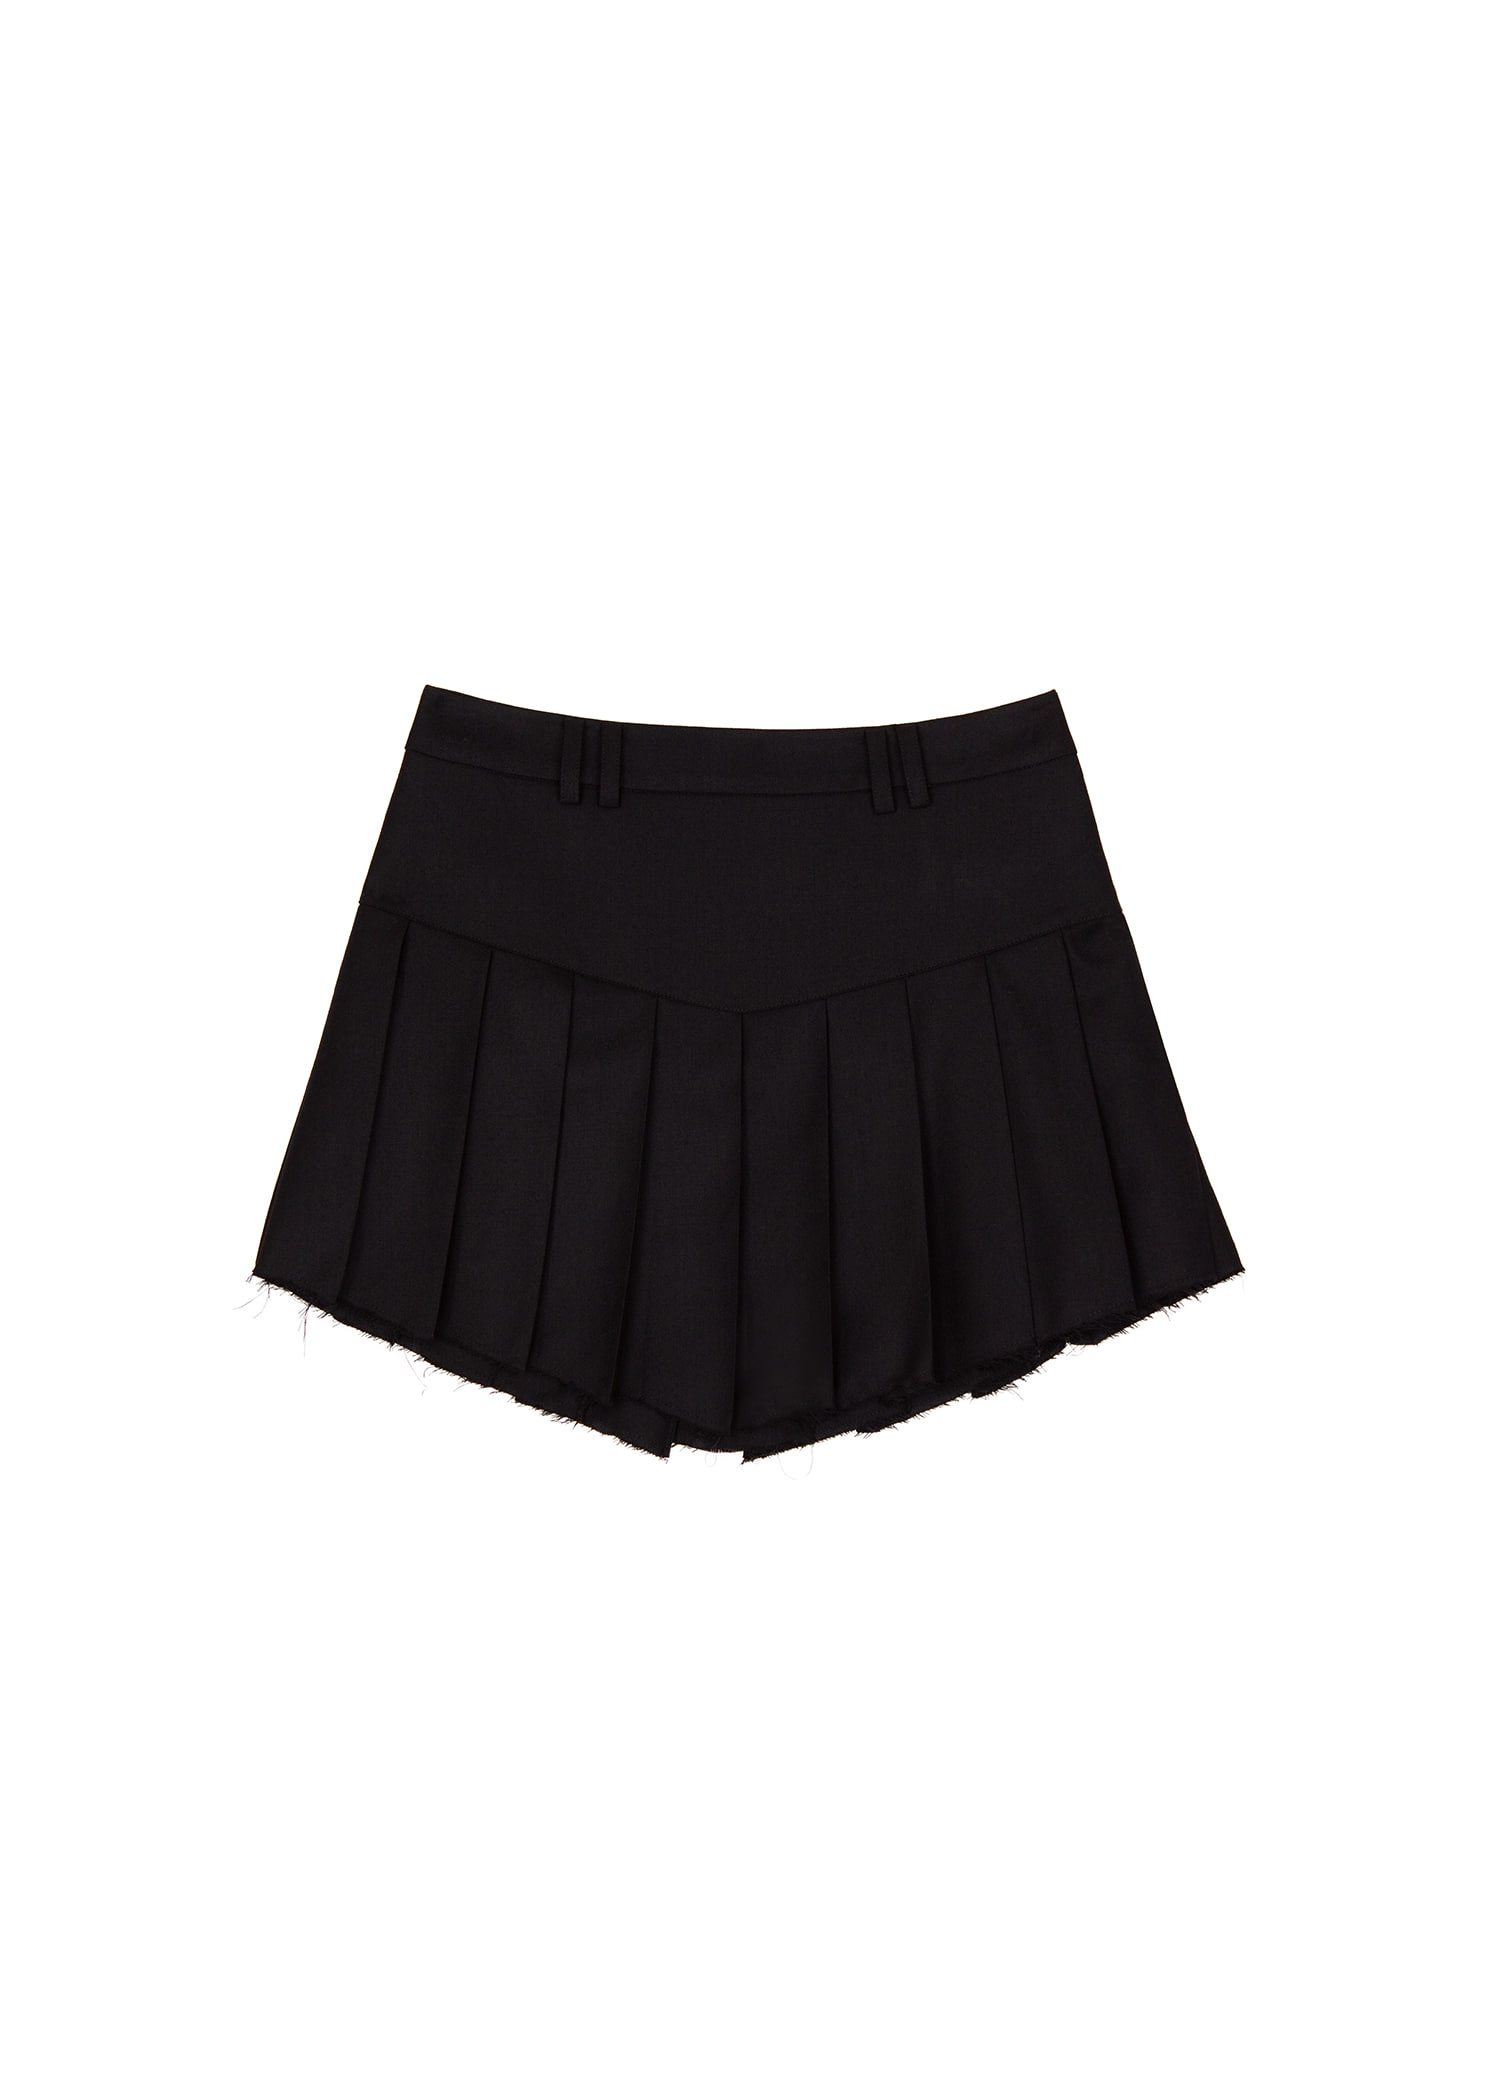 Inverted Triangle Skirt (Black)